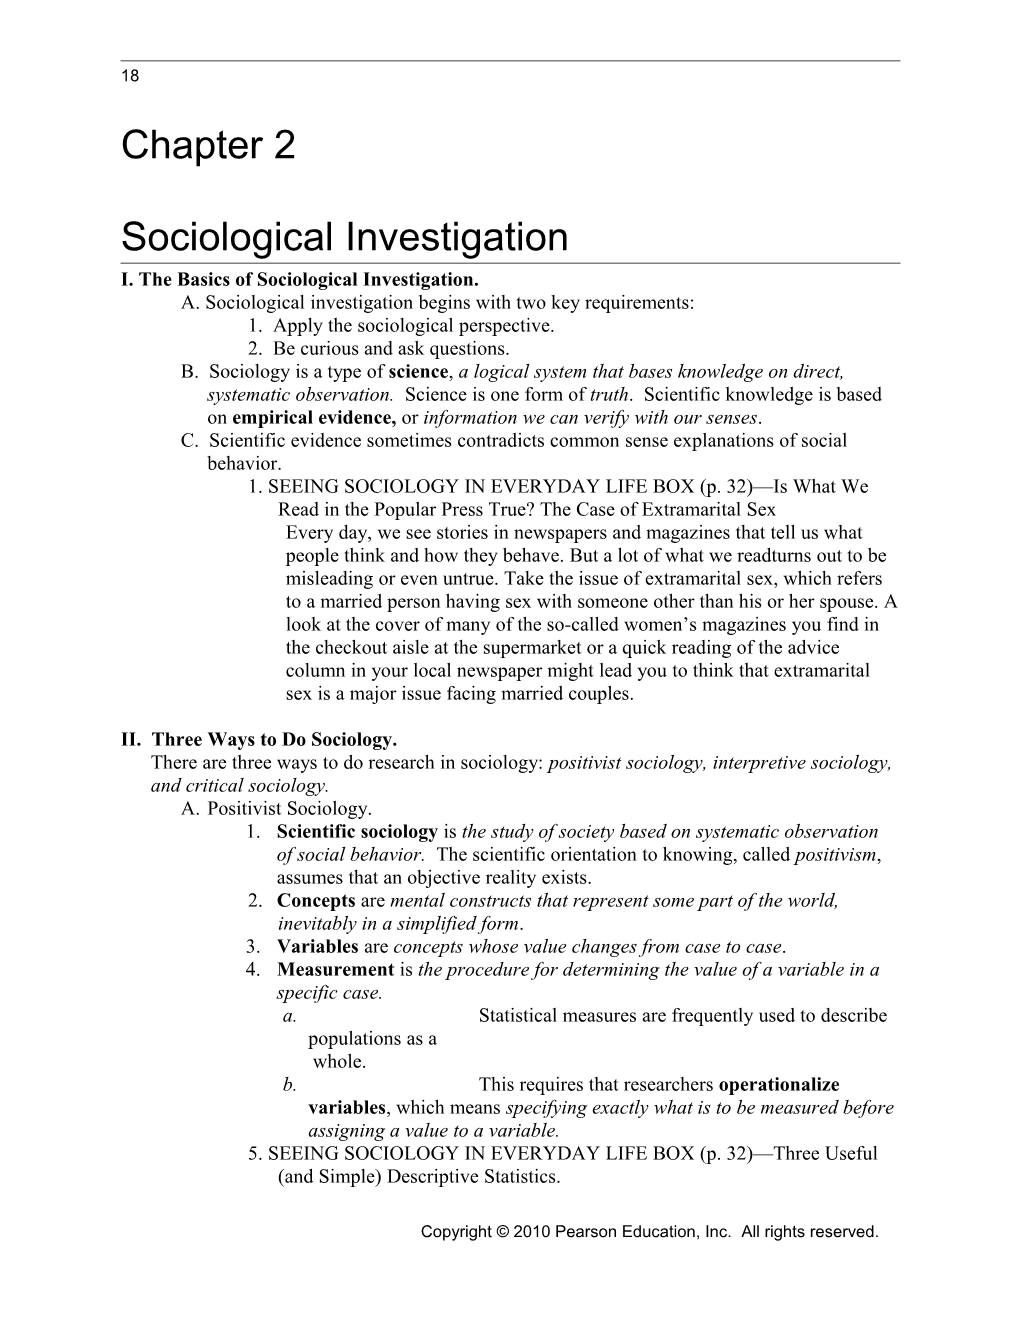 I. the Basics of Sociological Investigation